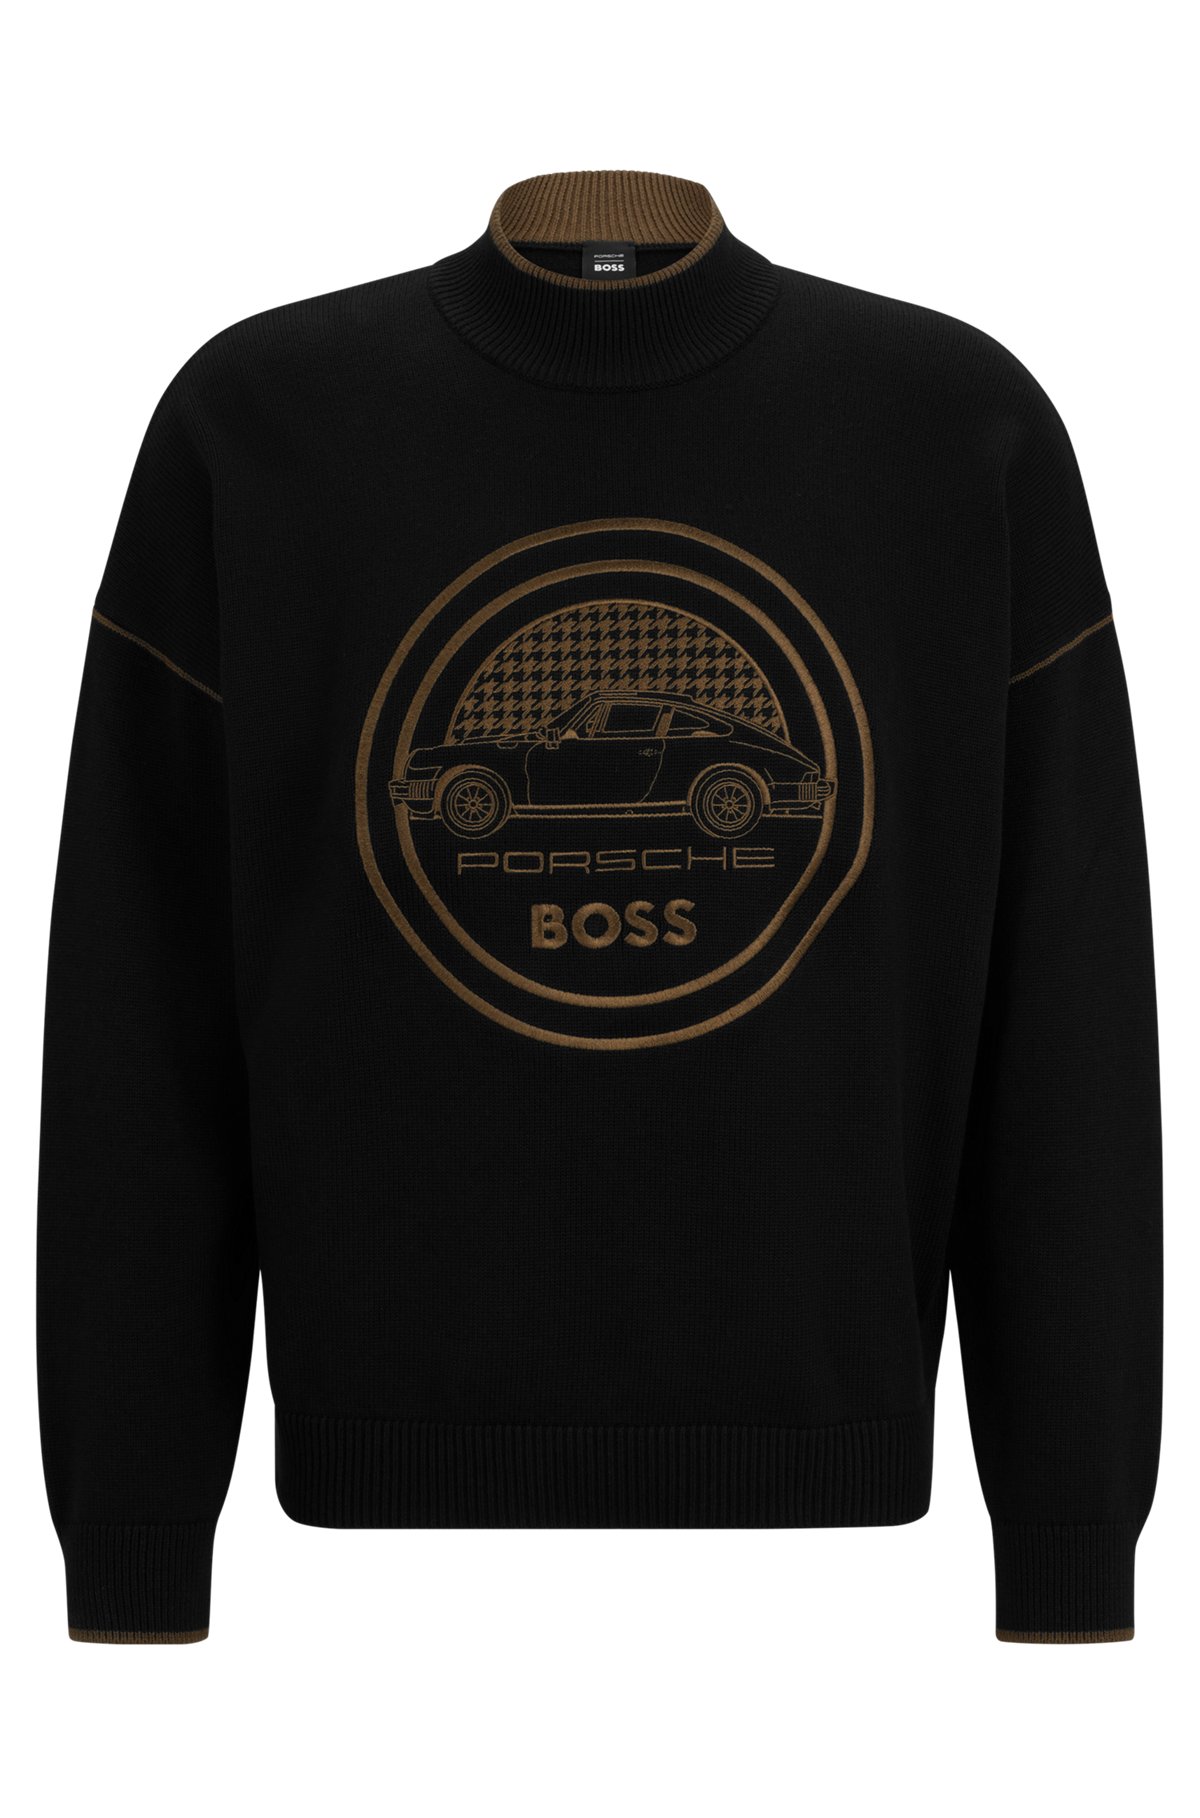 Porsche x BOSS capsule-logo sweatshirt in cotton and wool, Black